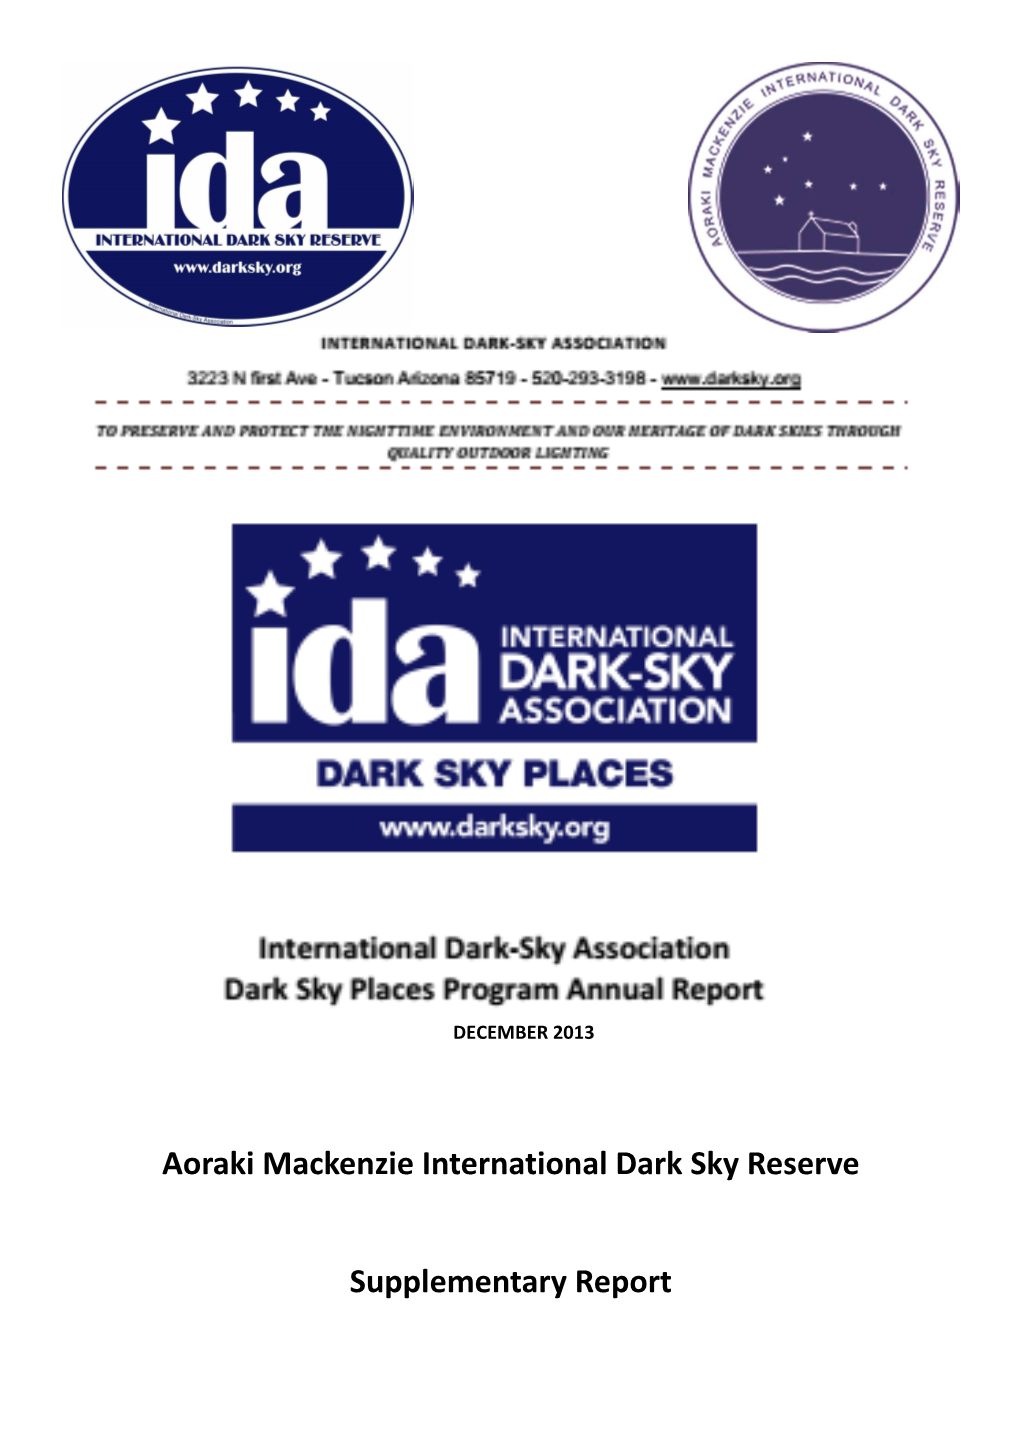 Aoraki Mackenzie International Dark Sky Reserve Supplementary Report